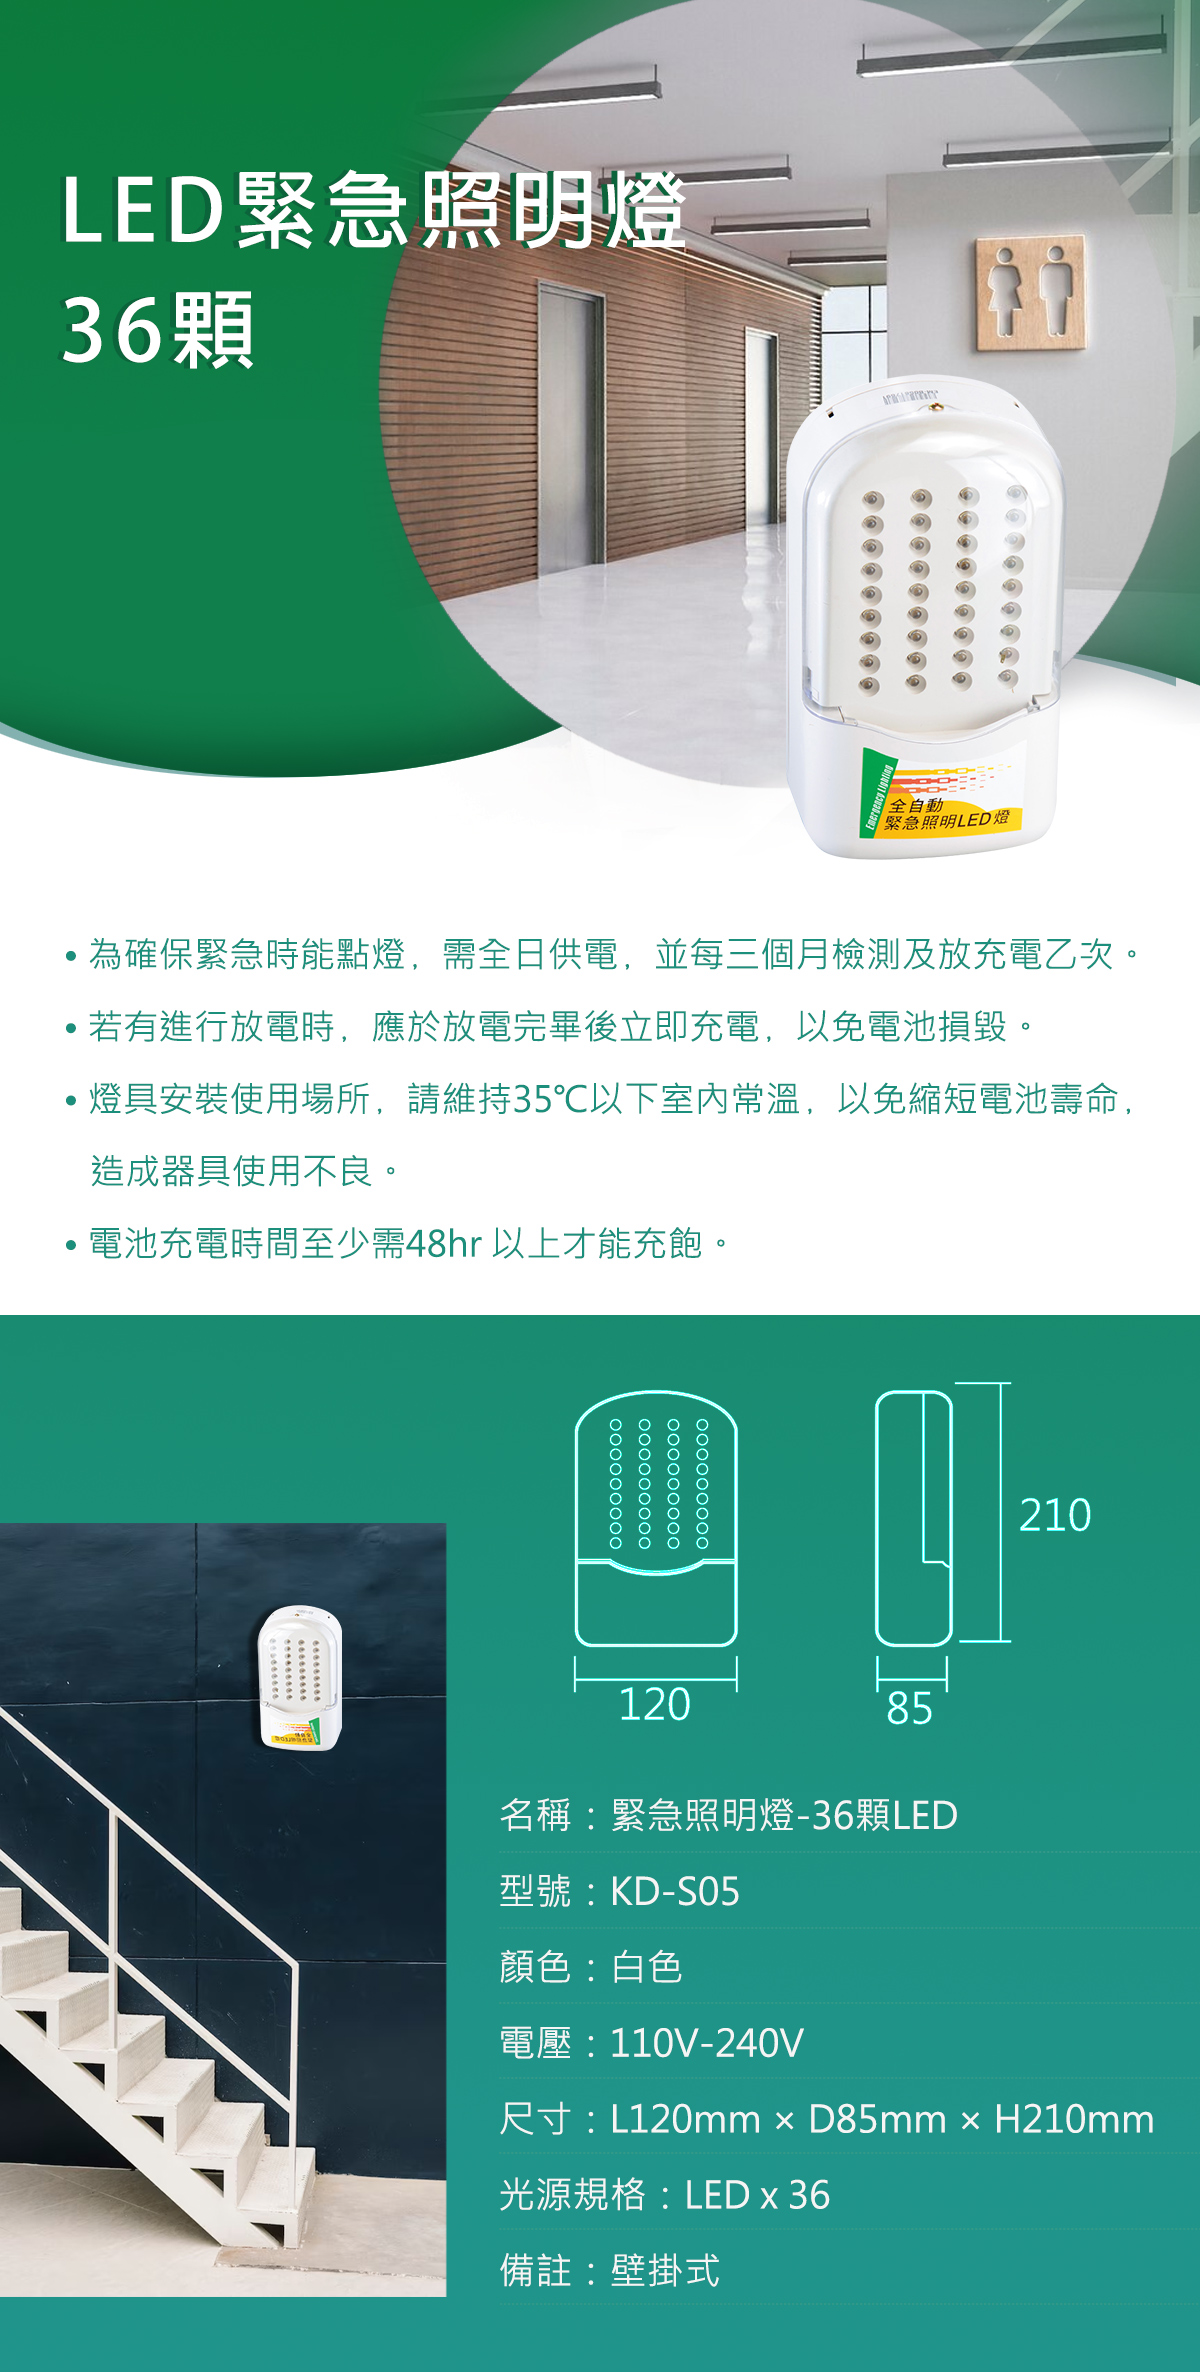 【KAO'S】LED 緊急照明燈 全電壓 台灣製造 LEDX36